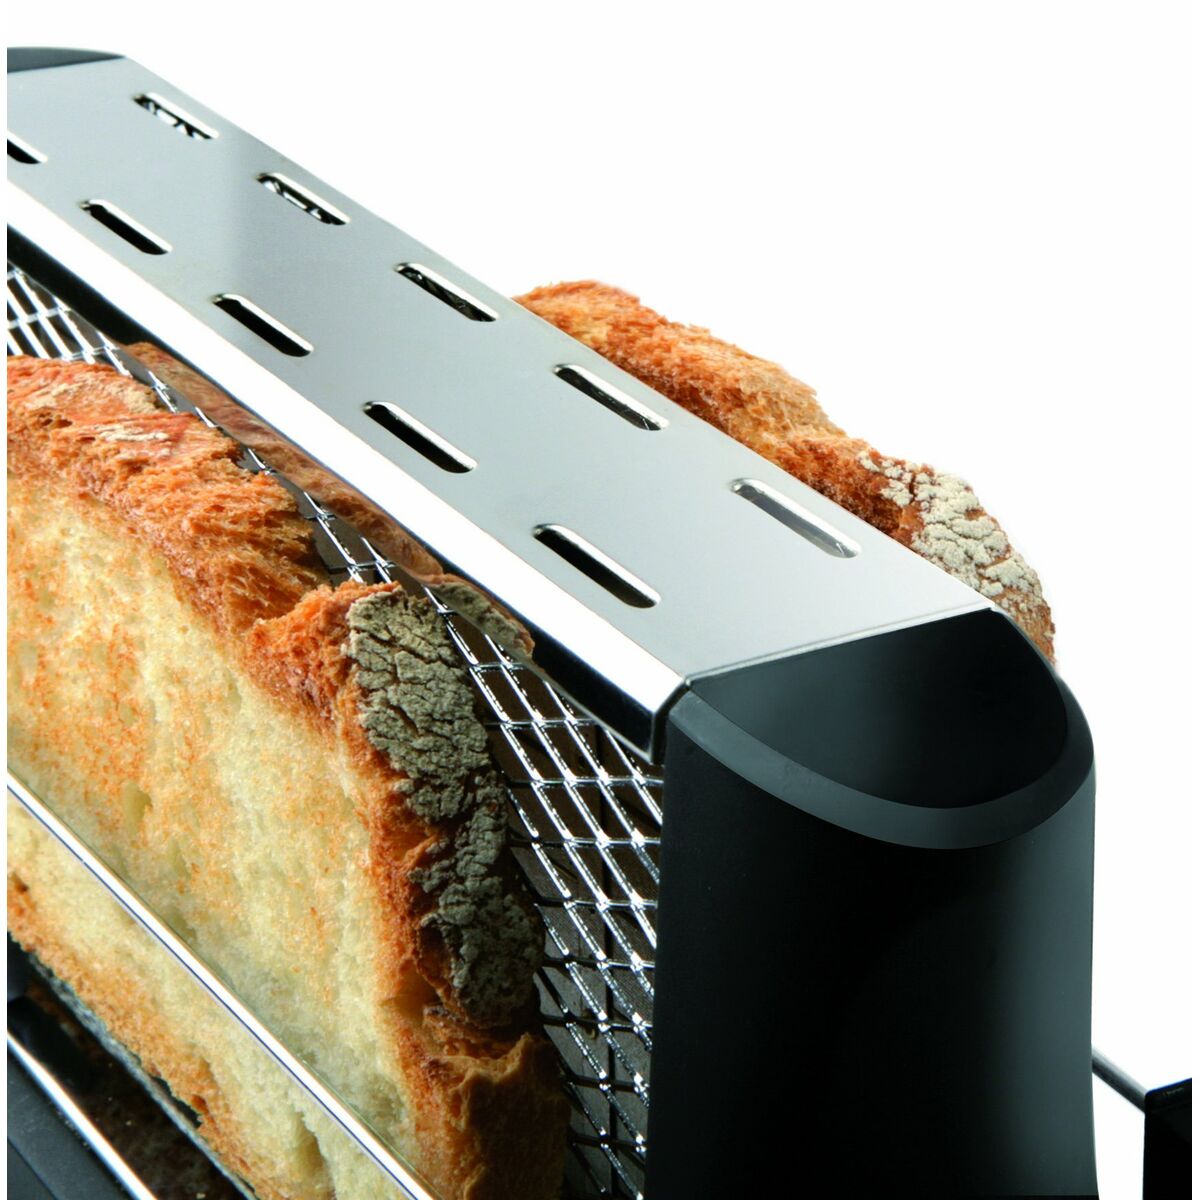 Toaster Taurus 960632 Todopan 700W Rostfreier Stahl - CA International 